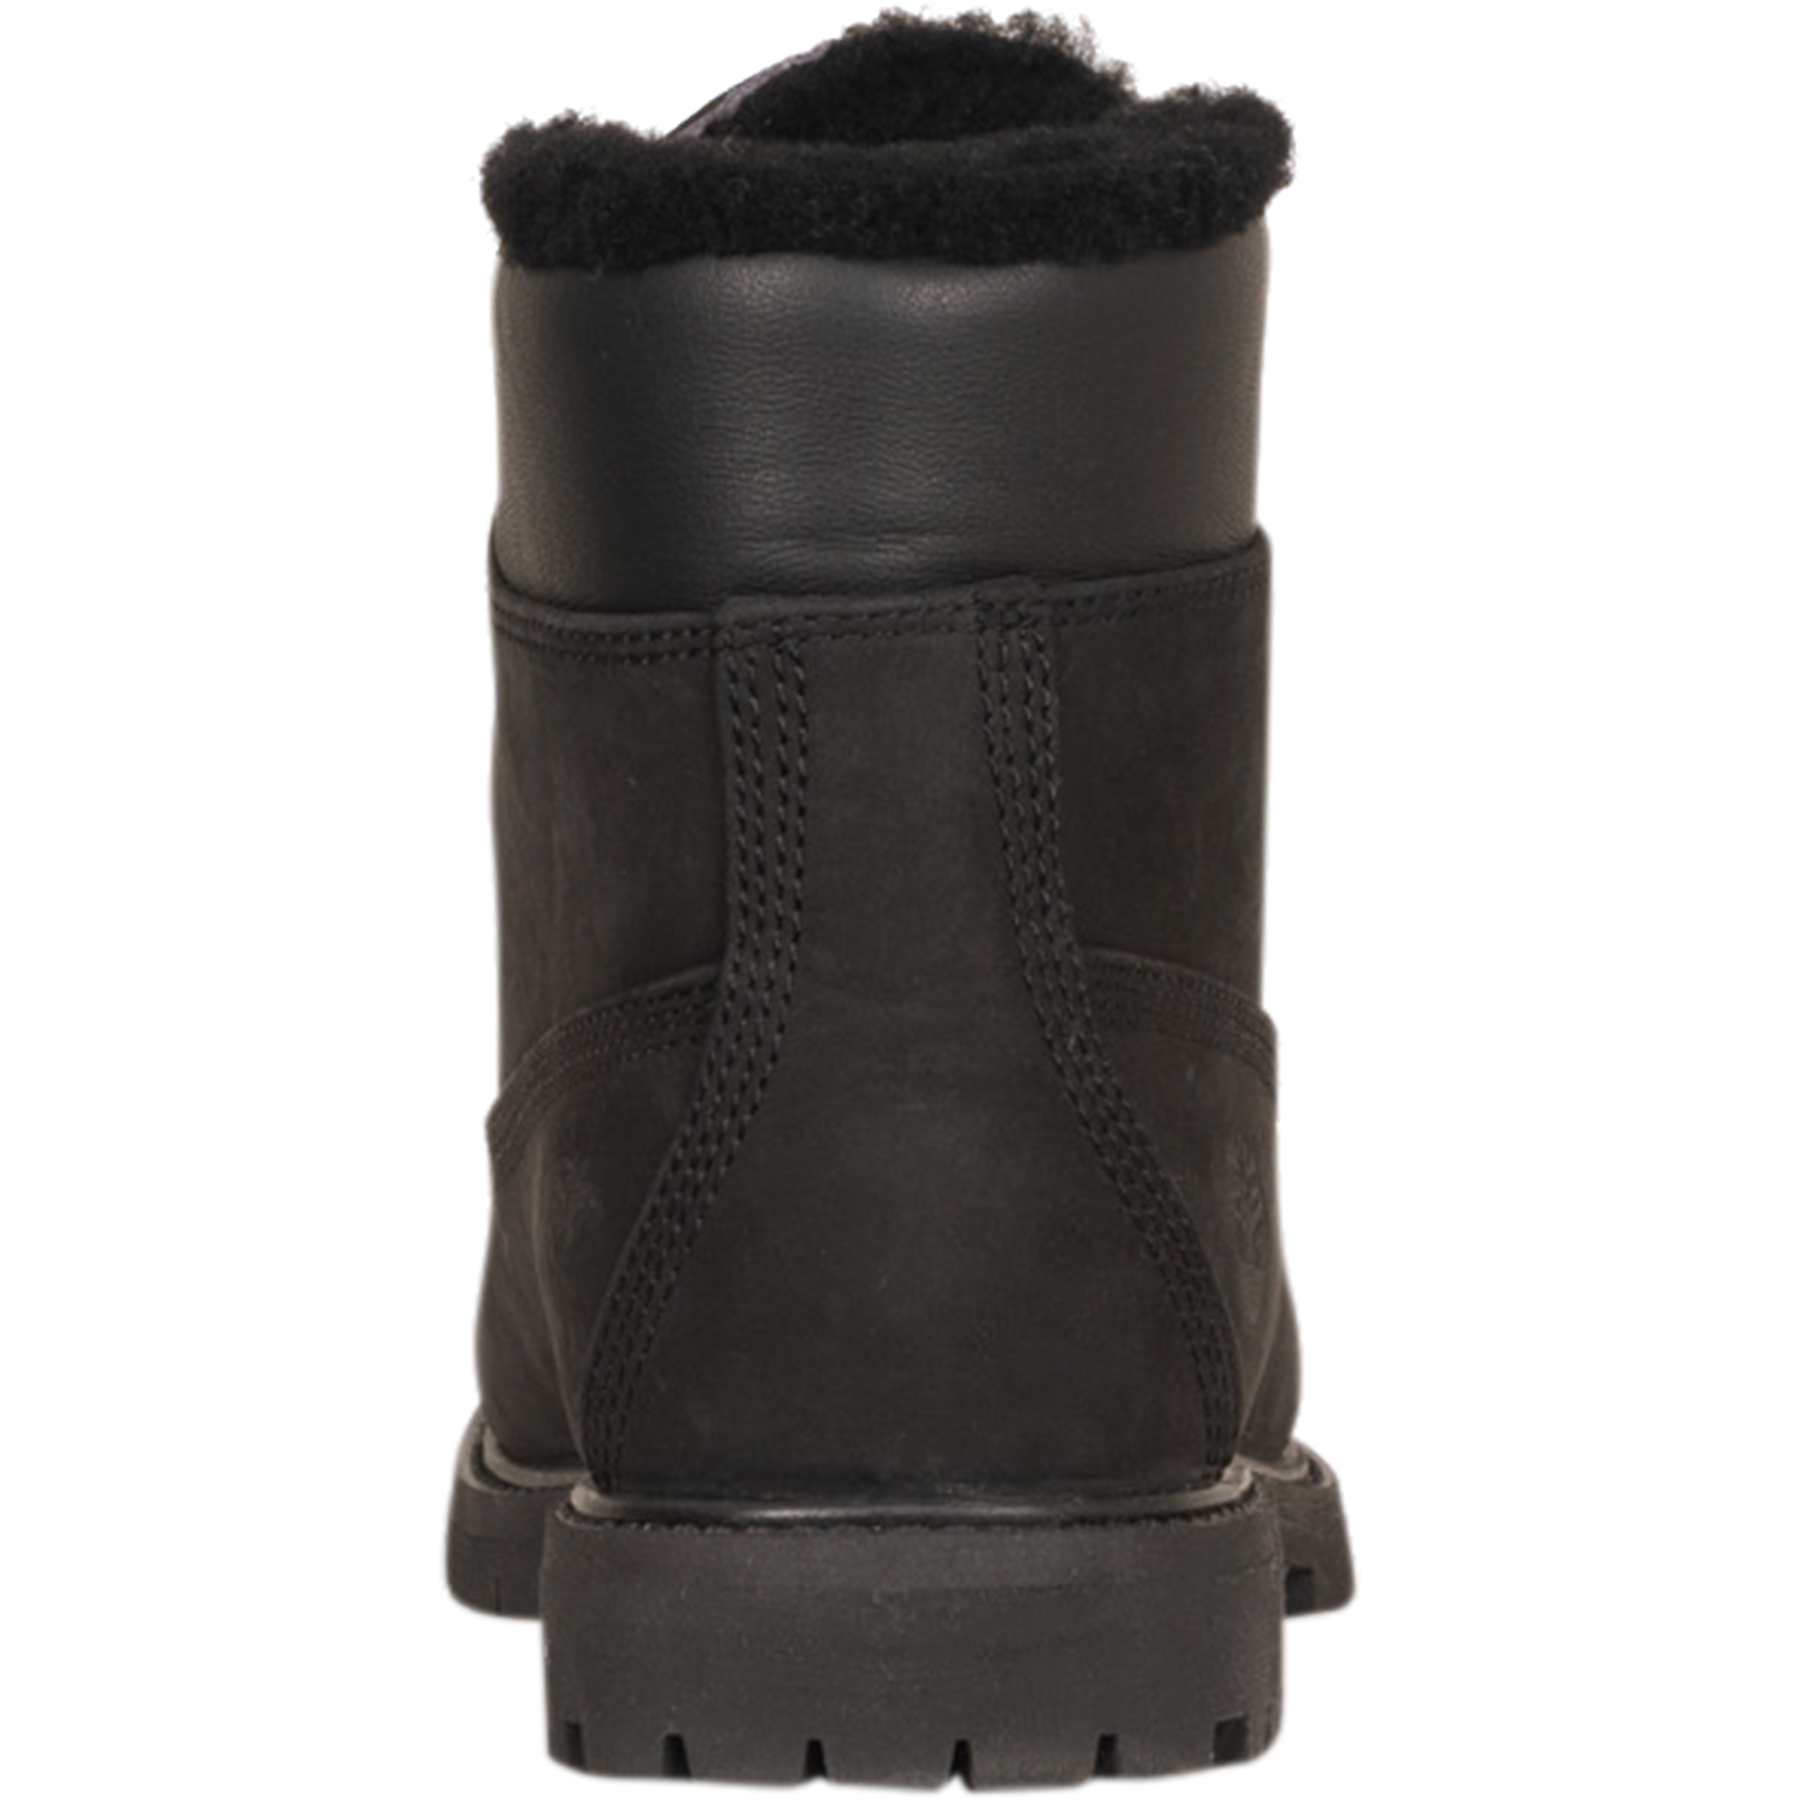 Timberland Premium 6 Inch Fur Lined Waterproof Boot - Black